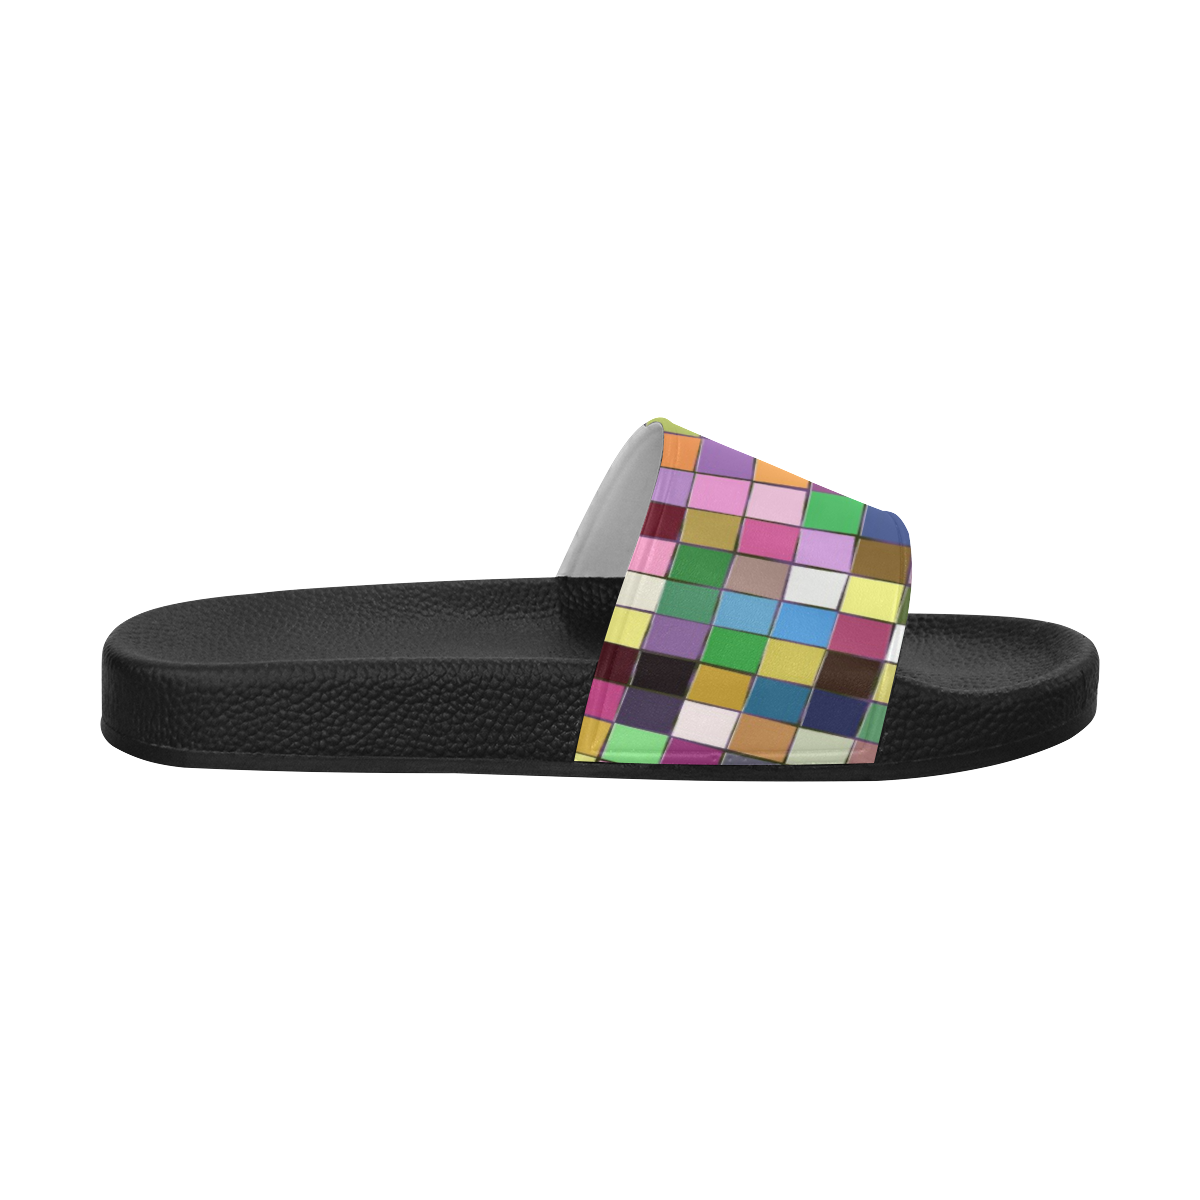 Mosaic by Artdrem Men's Slide Sandals (Model 057)